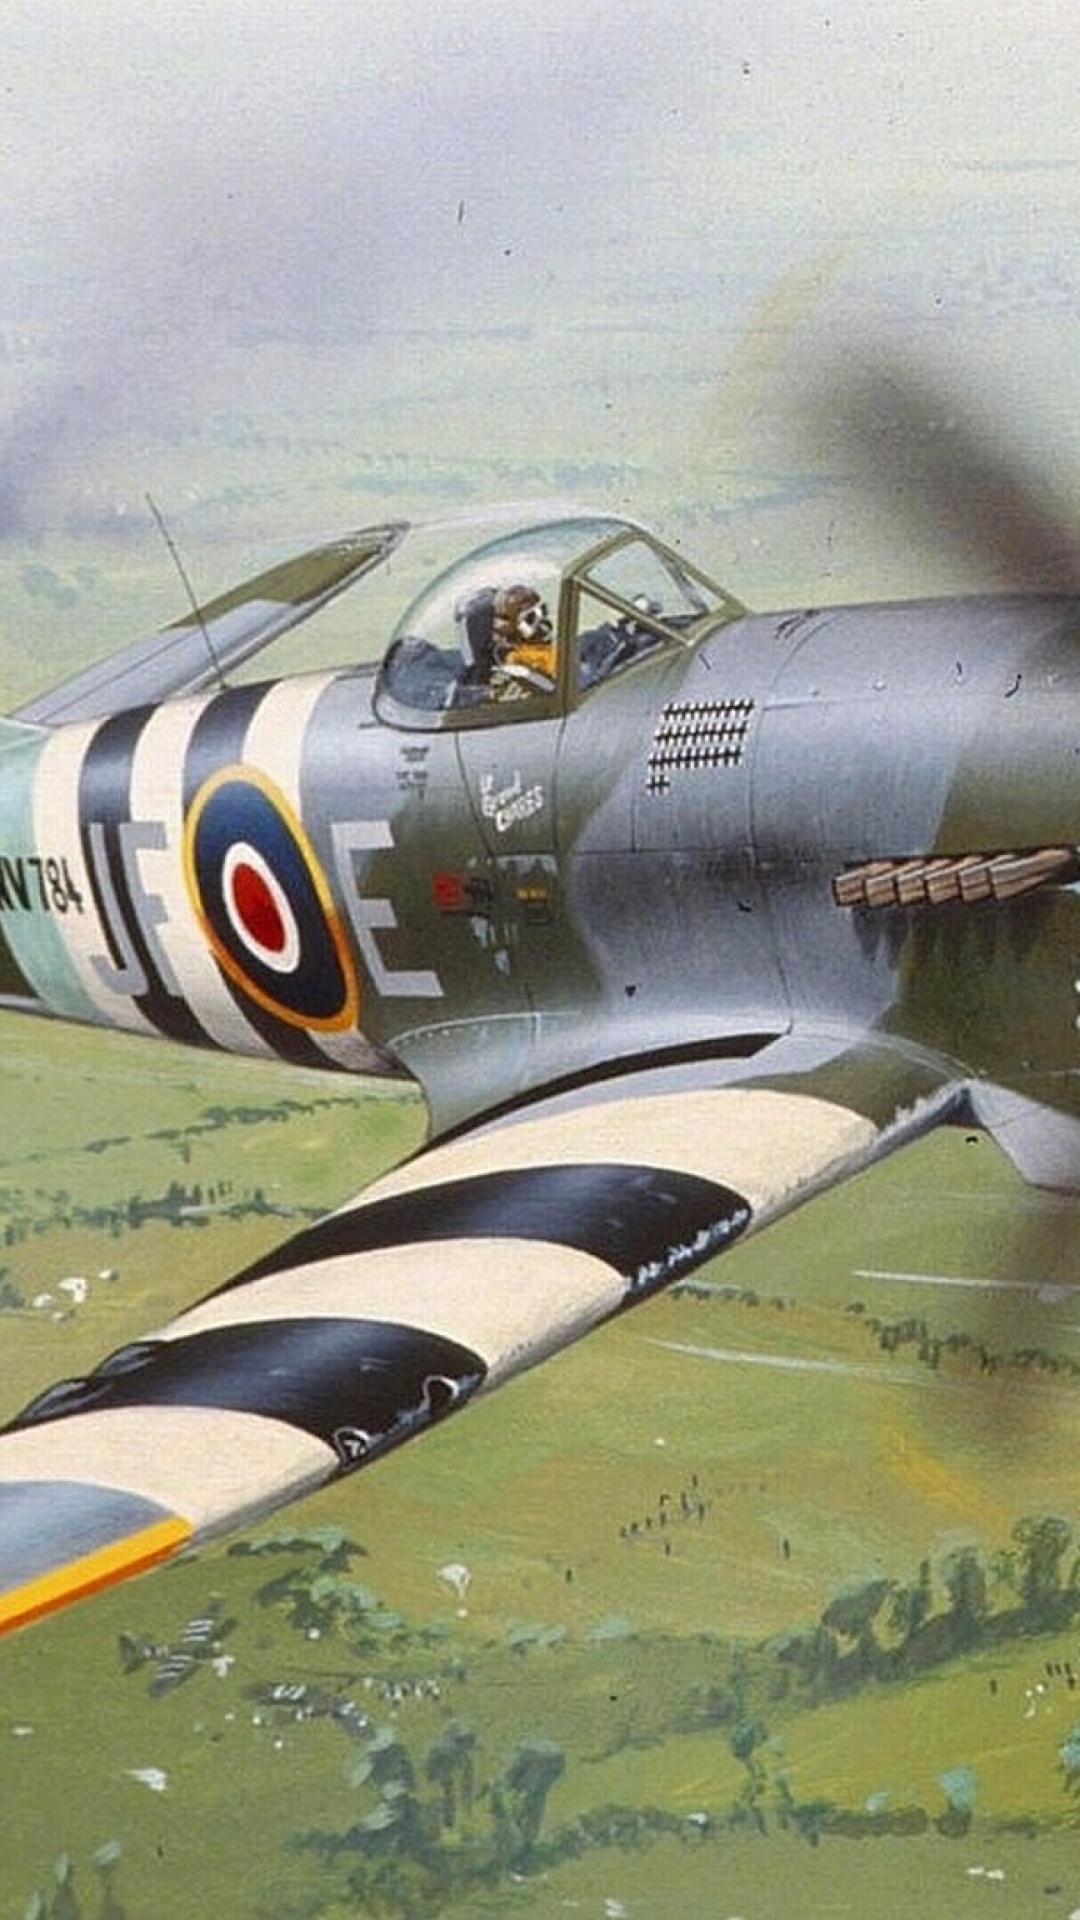 spitfire plane wallpaper